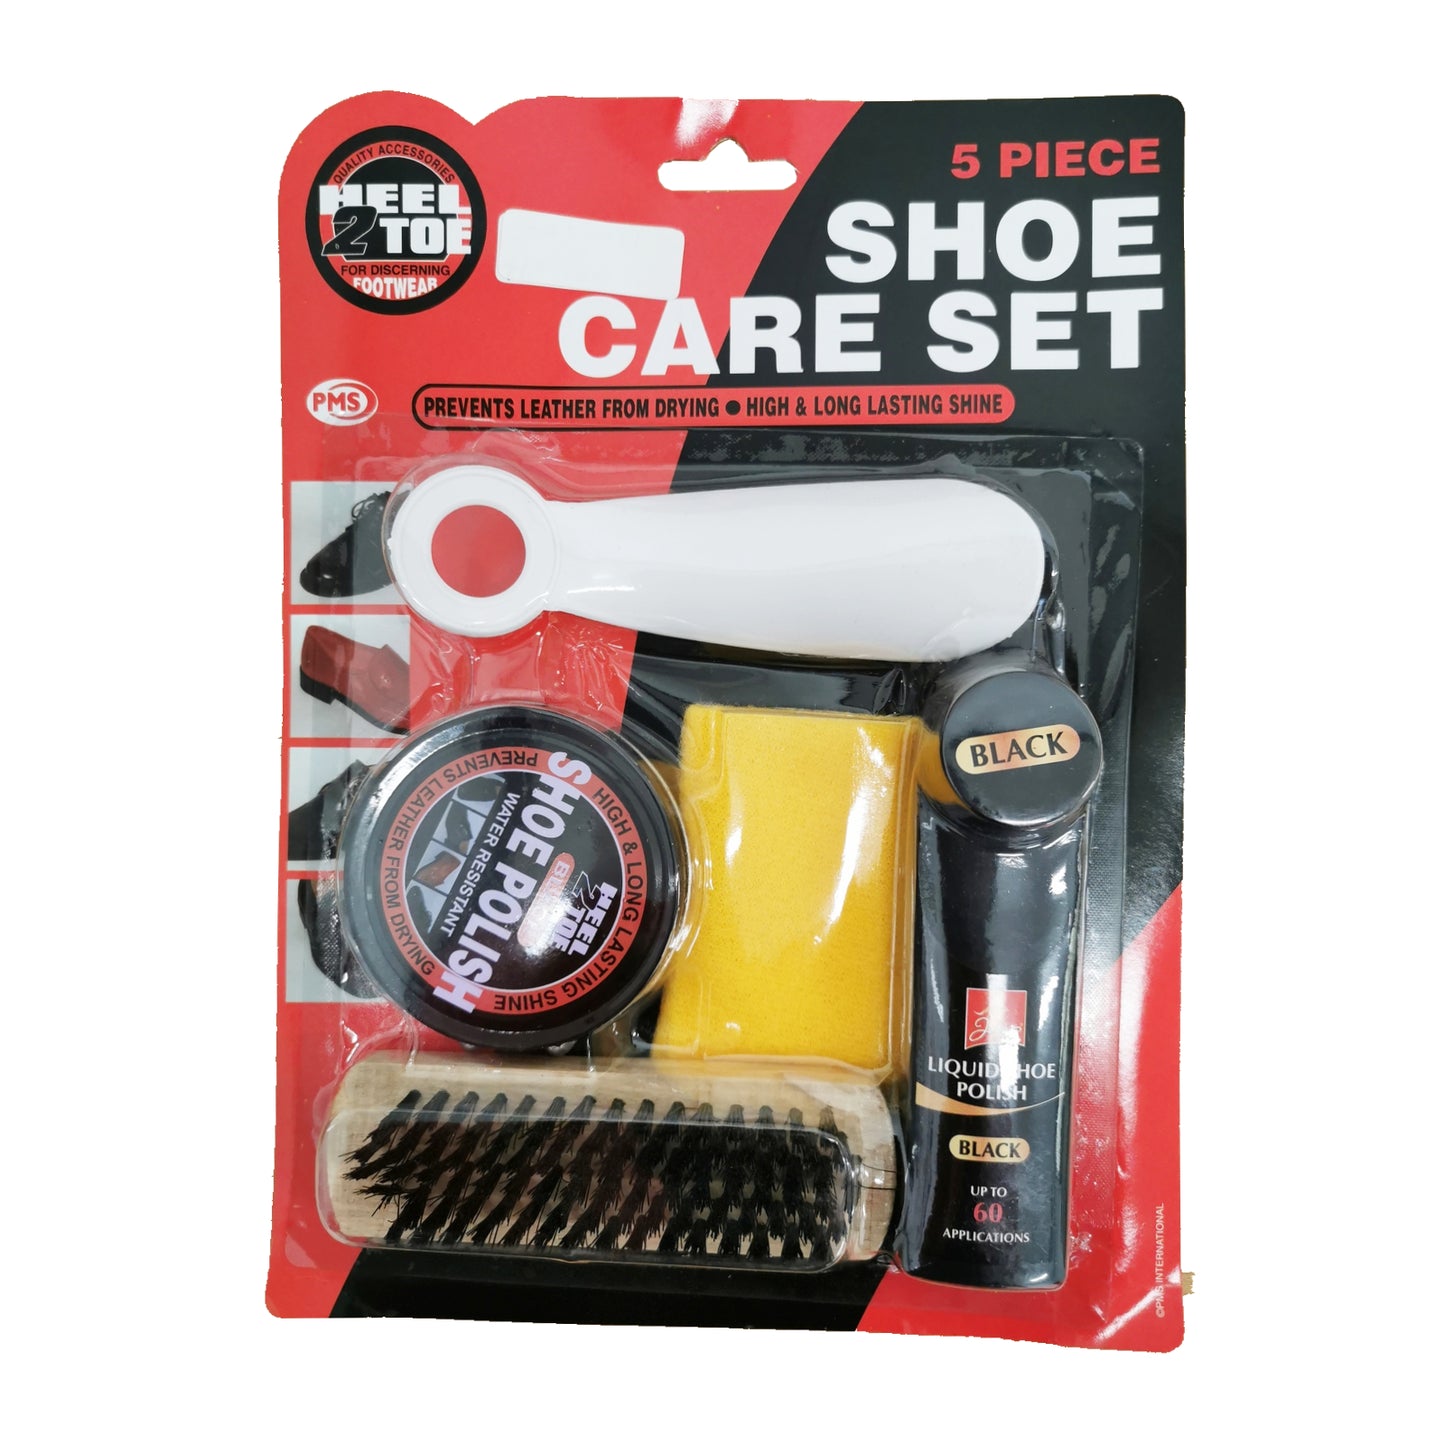 5 Piece Shoe Care Set Shine Polish Protect Leather Heel Care - Homeware Discounts